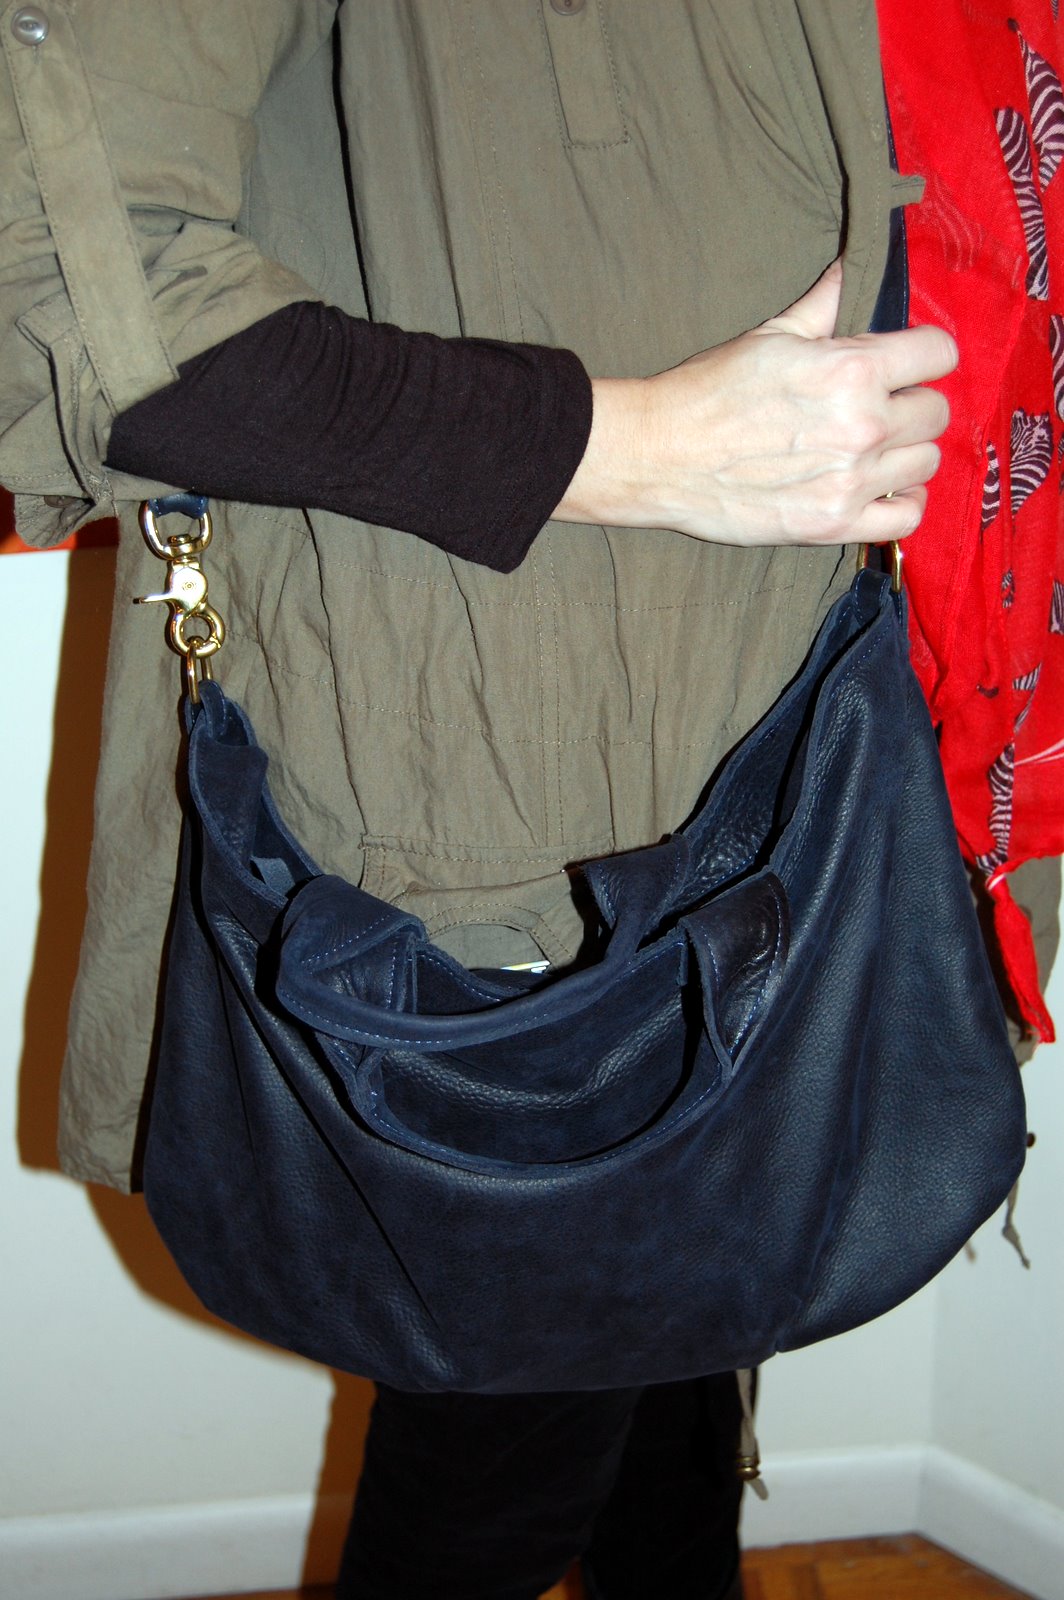 chelsea wears: Clare Vivier Messenger Bag